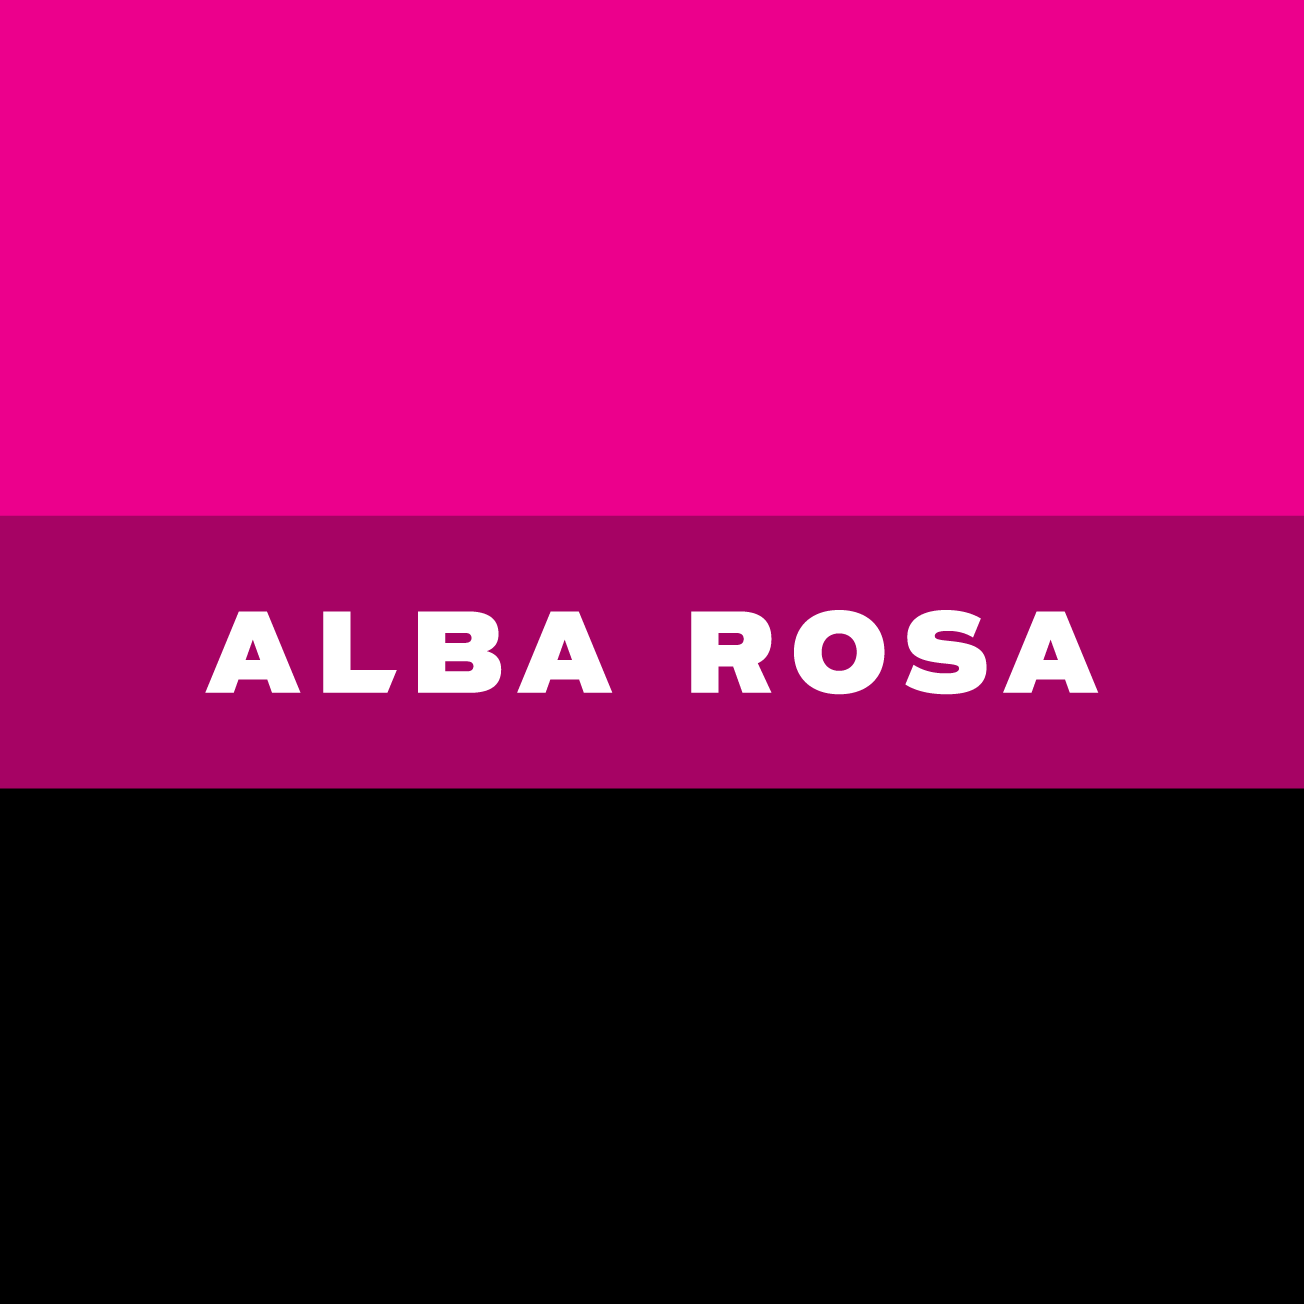 Club Image for ALBA ROSA